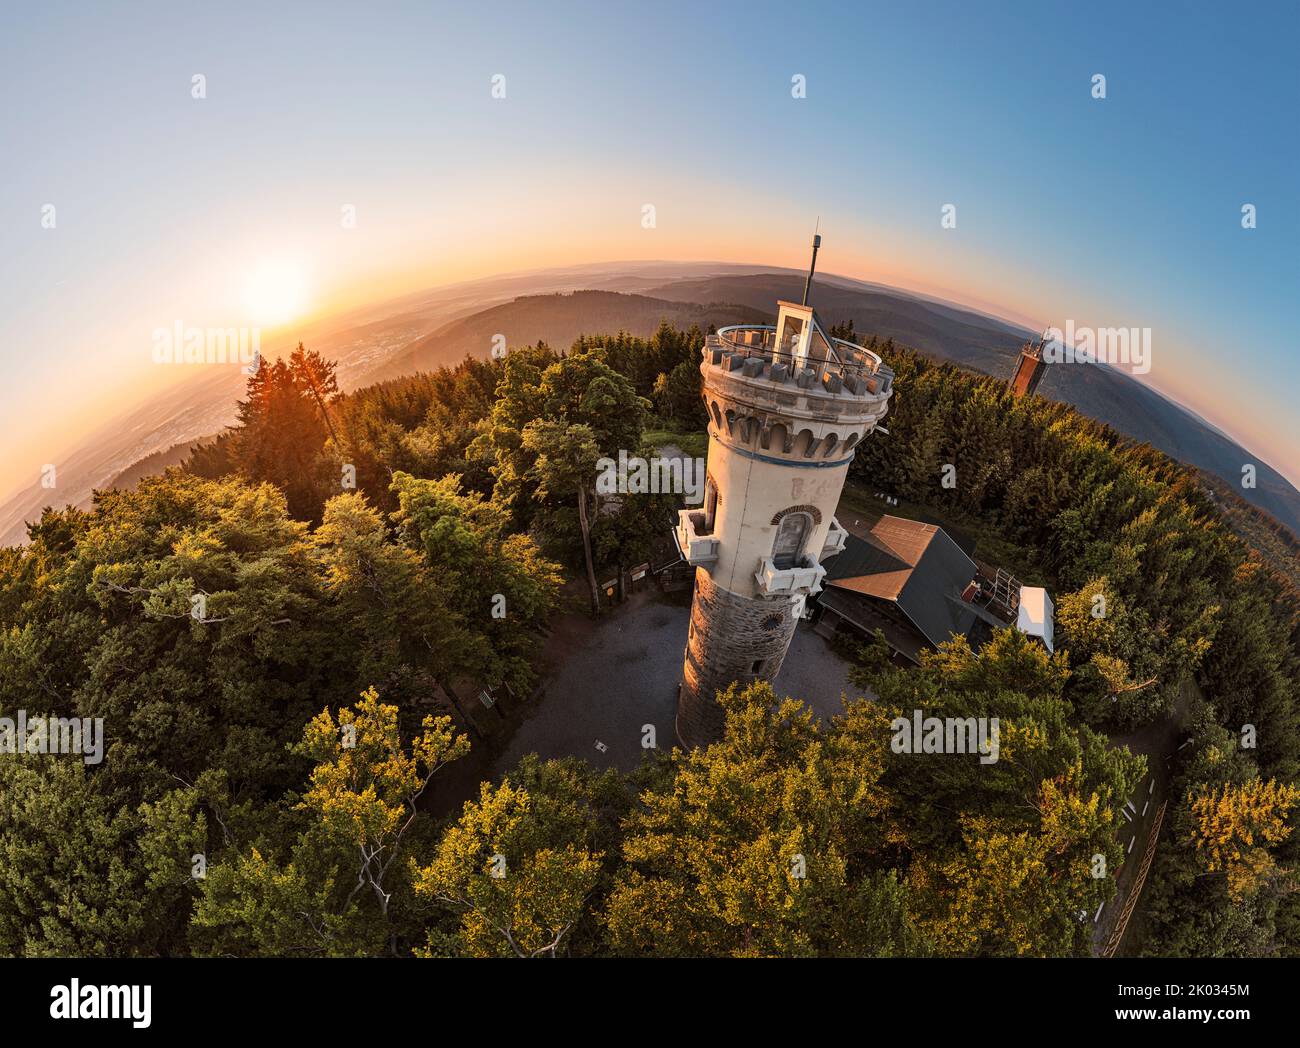 Germany, Thuringia, Ilmenau, Kickelhahn, observation tower, telekom tower (background), sunrise, forest, mountains, hemisphere panorama Stock Photo